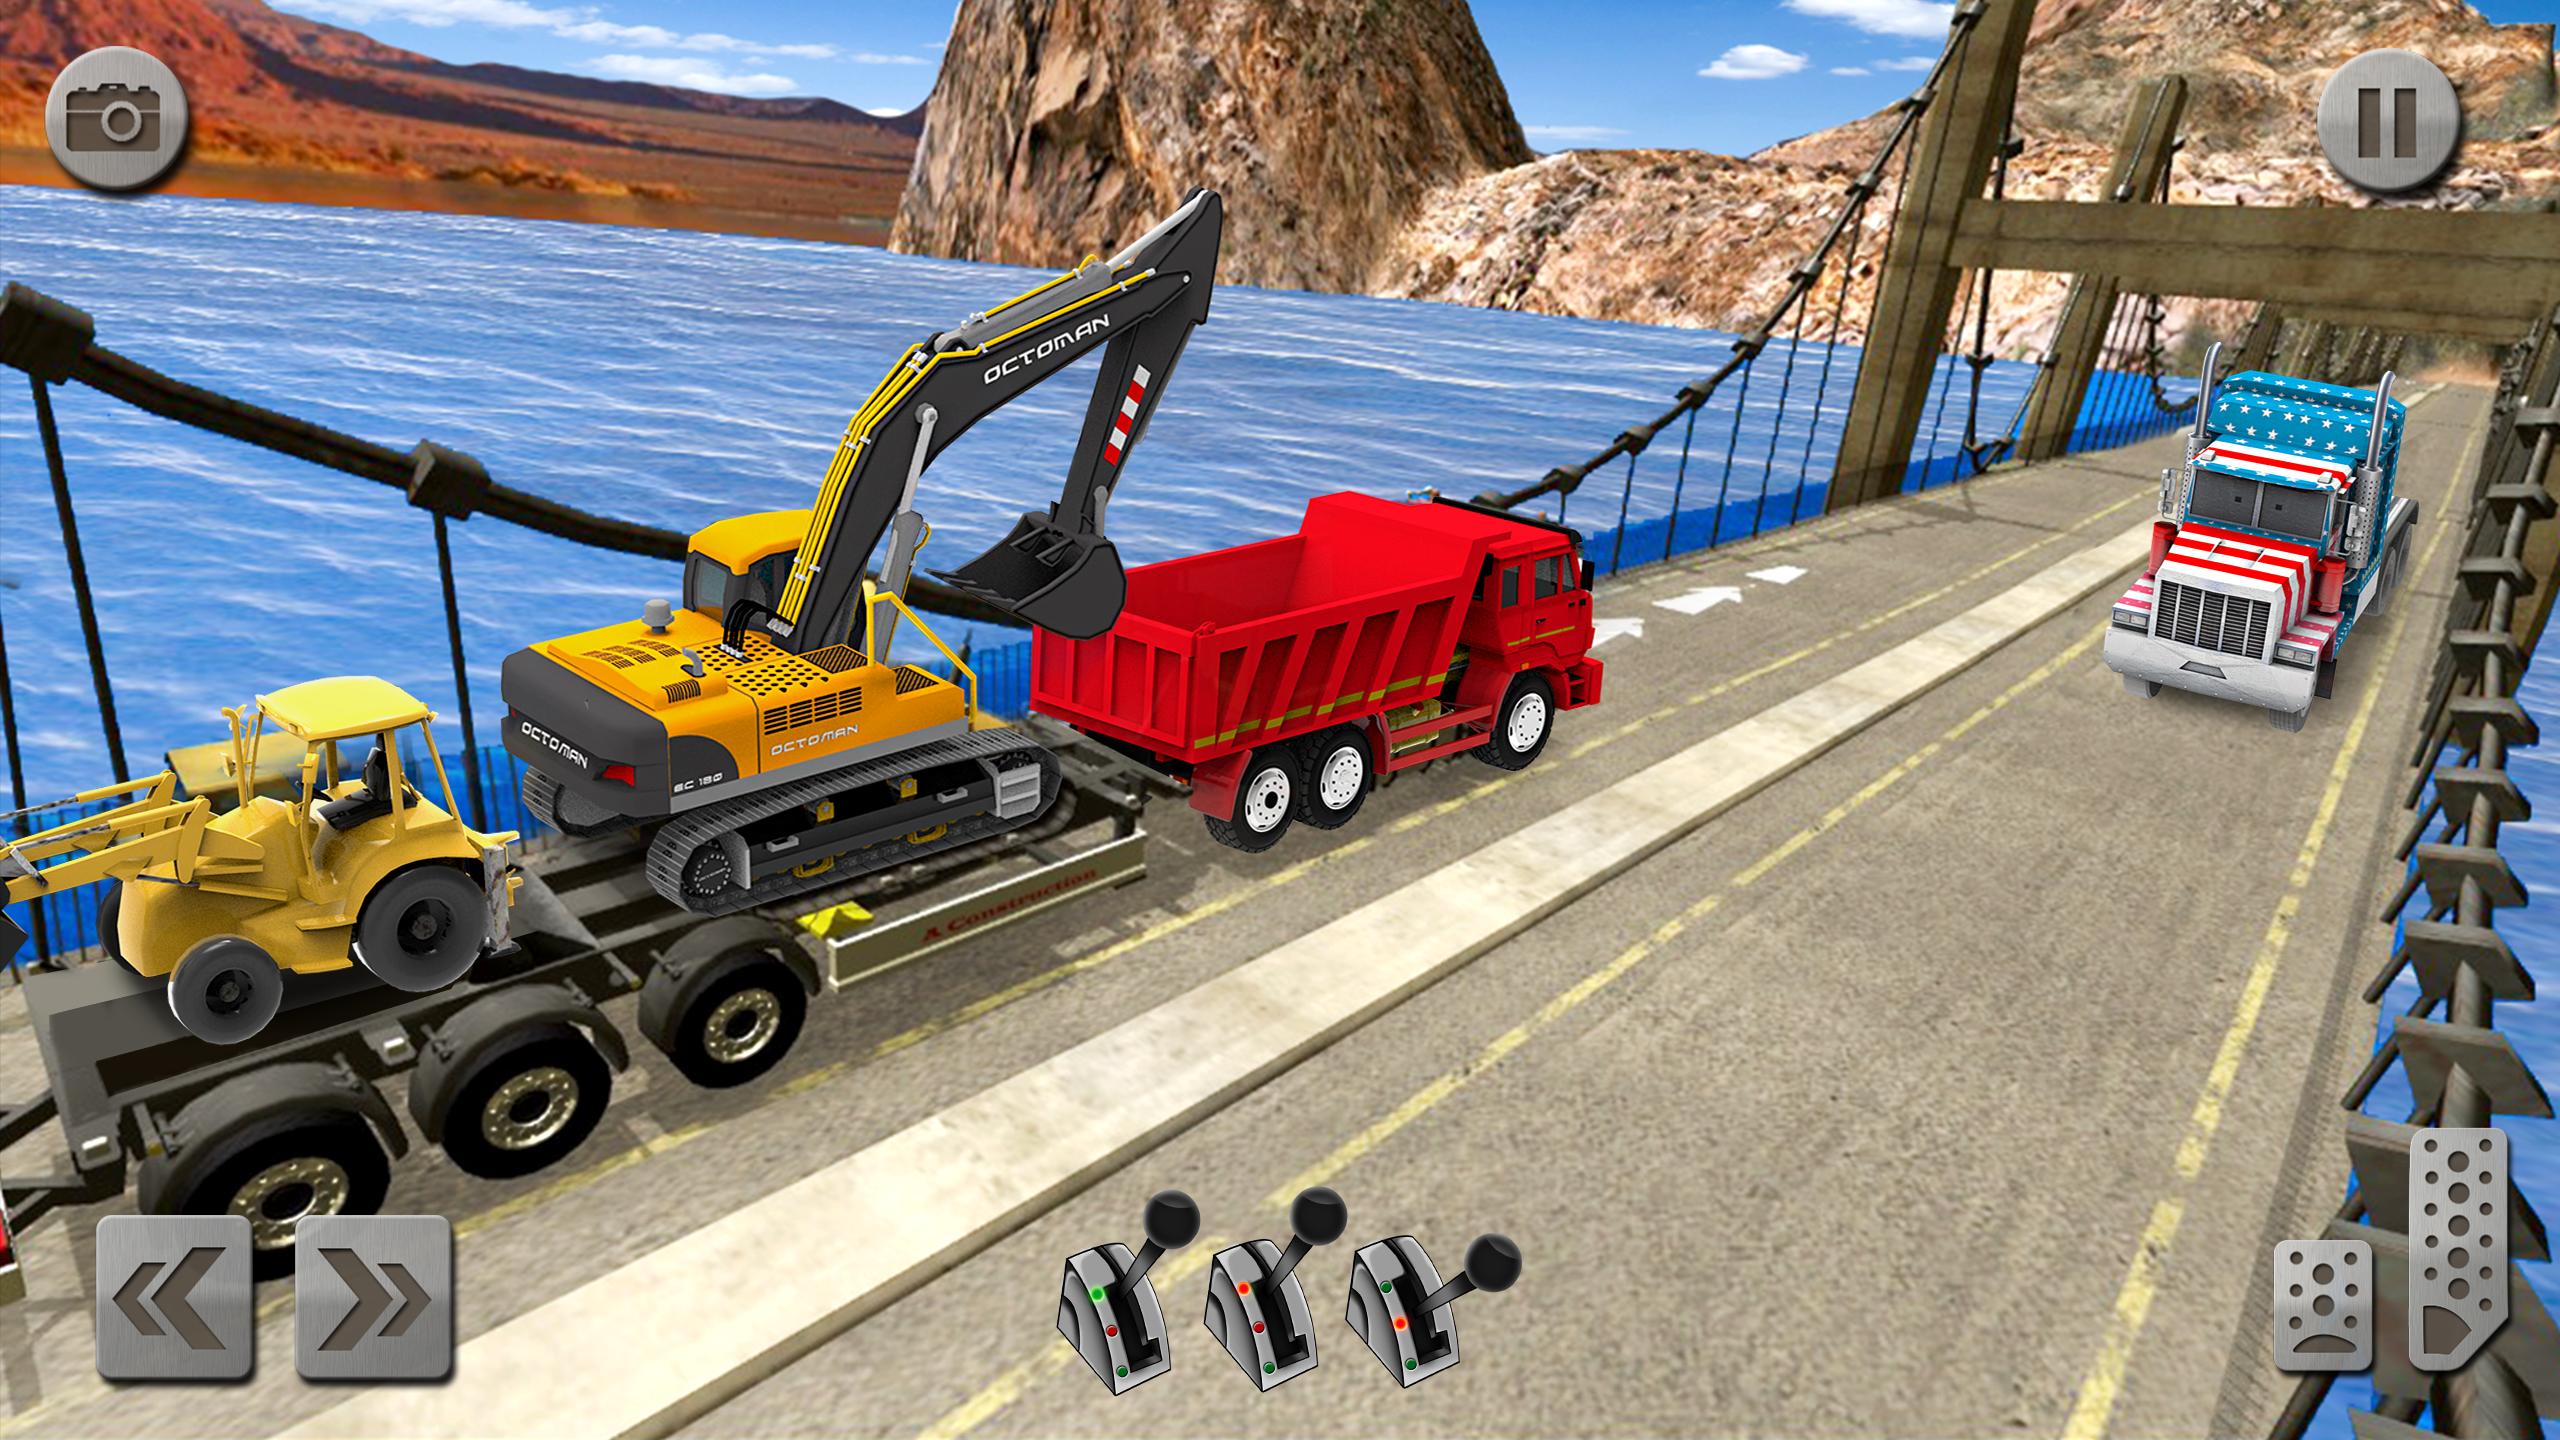 Sand Excavator Truck Driving Rescue Simulator game 5.2 Screenshot 10